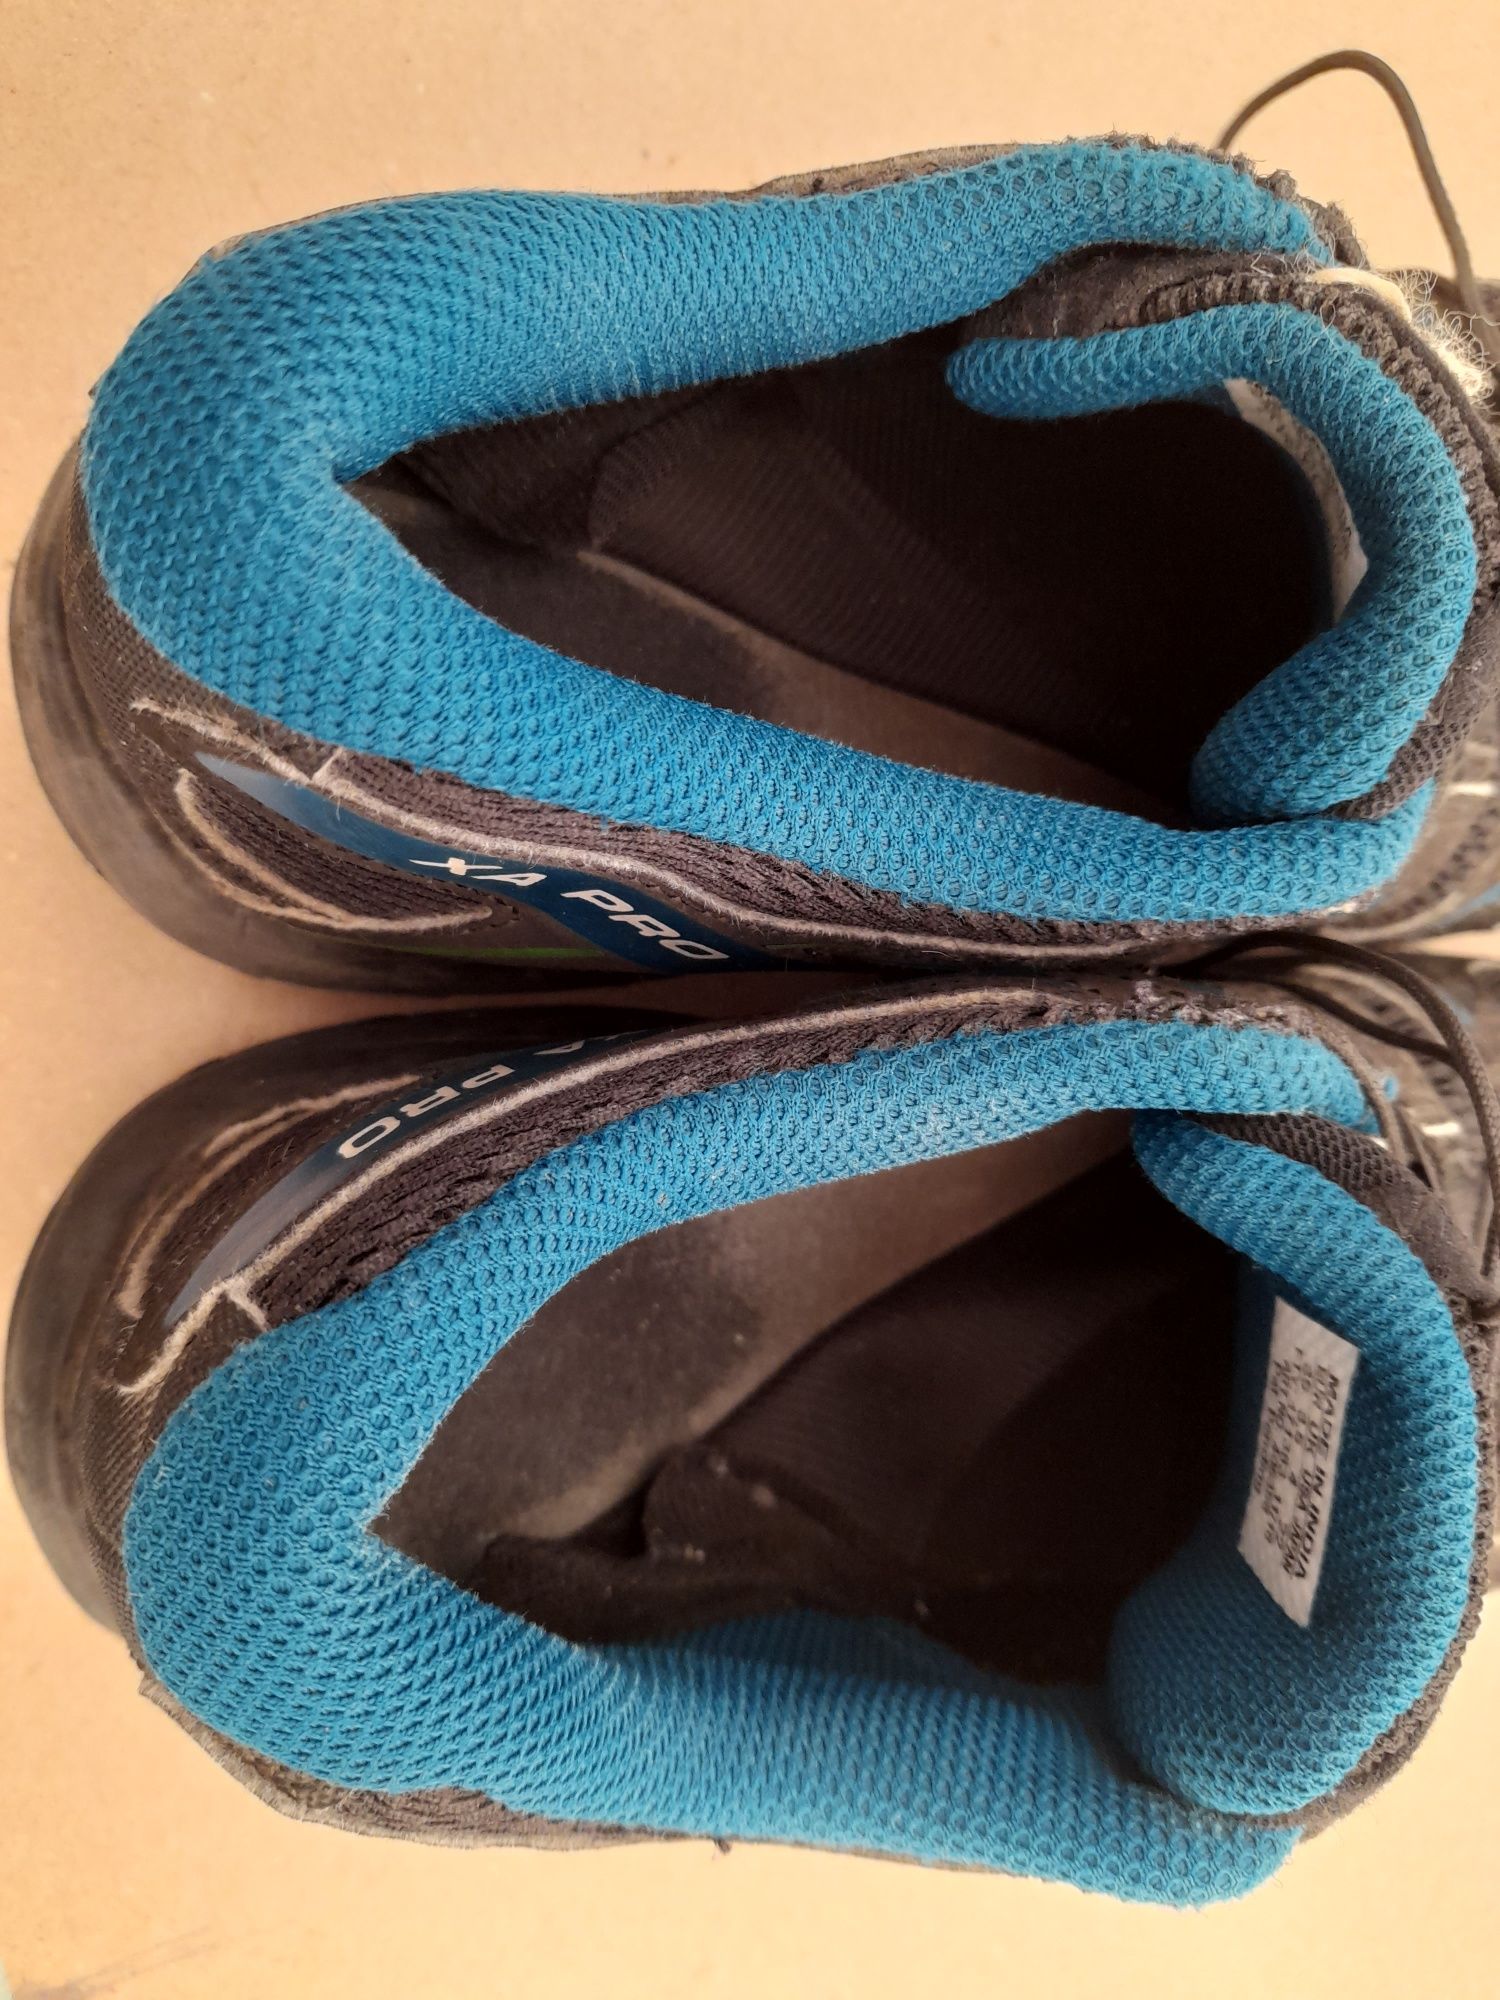 Salomon Xa Pro 3D J 406388 buty biegowo trekkingowe r. 36 (W 22cm)